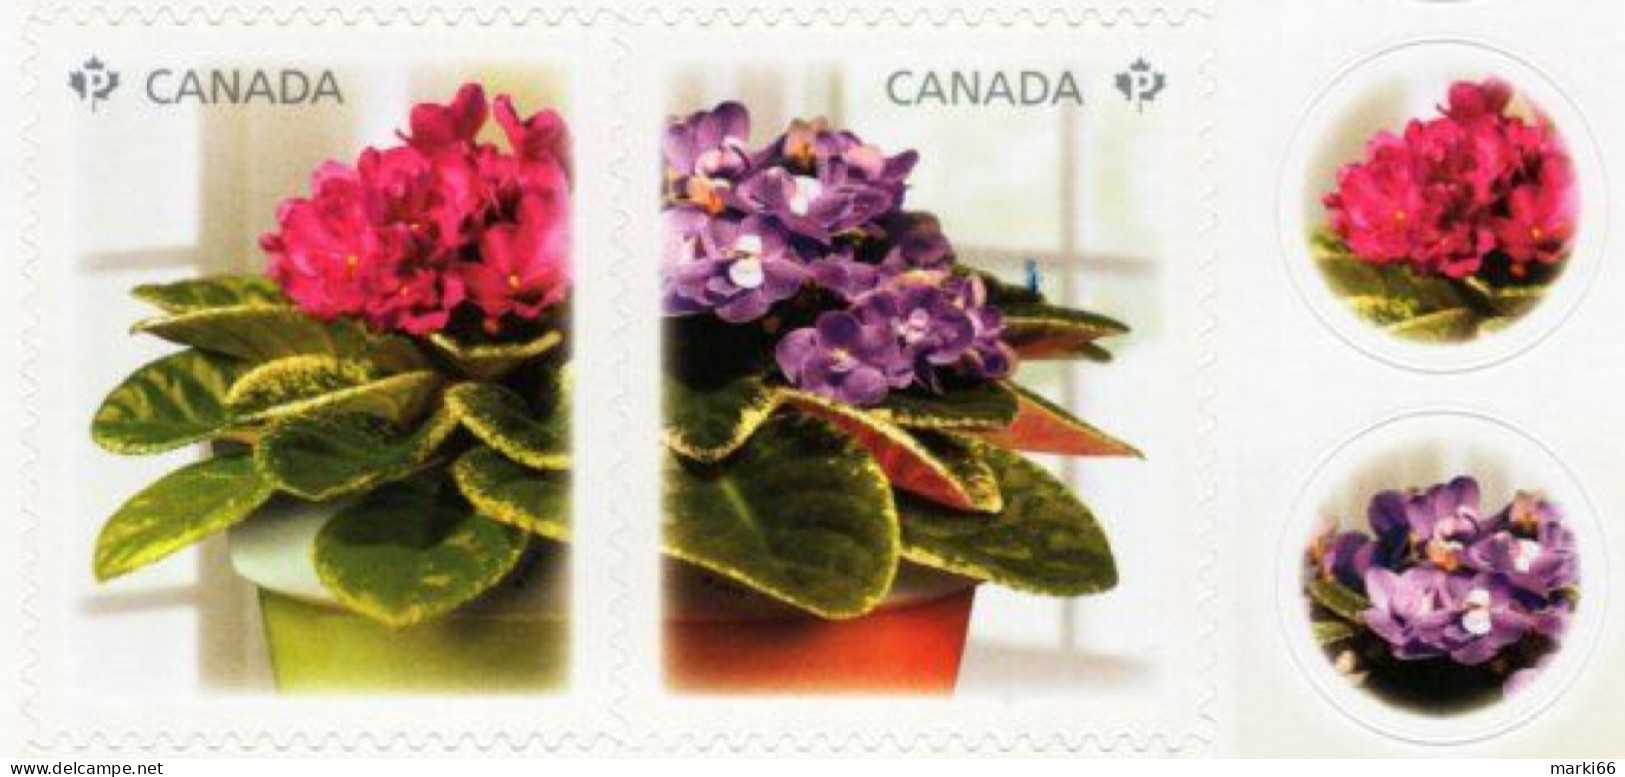 Canada - 2010 - African Violets - Saintpaulias - Mint Self-adhesive Booklet Stamp Set - Ongebruikt